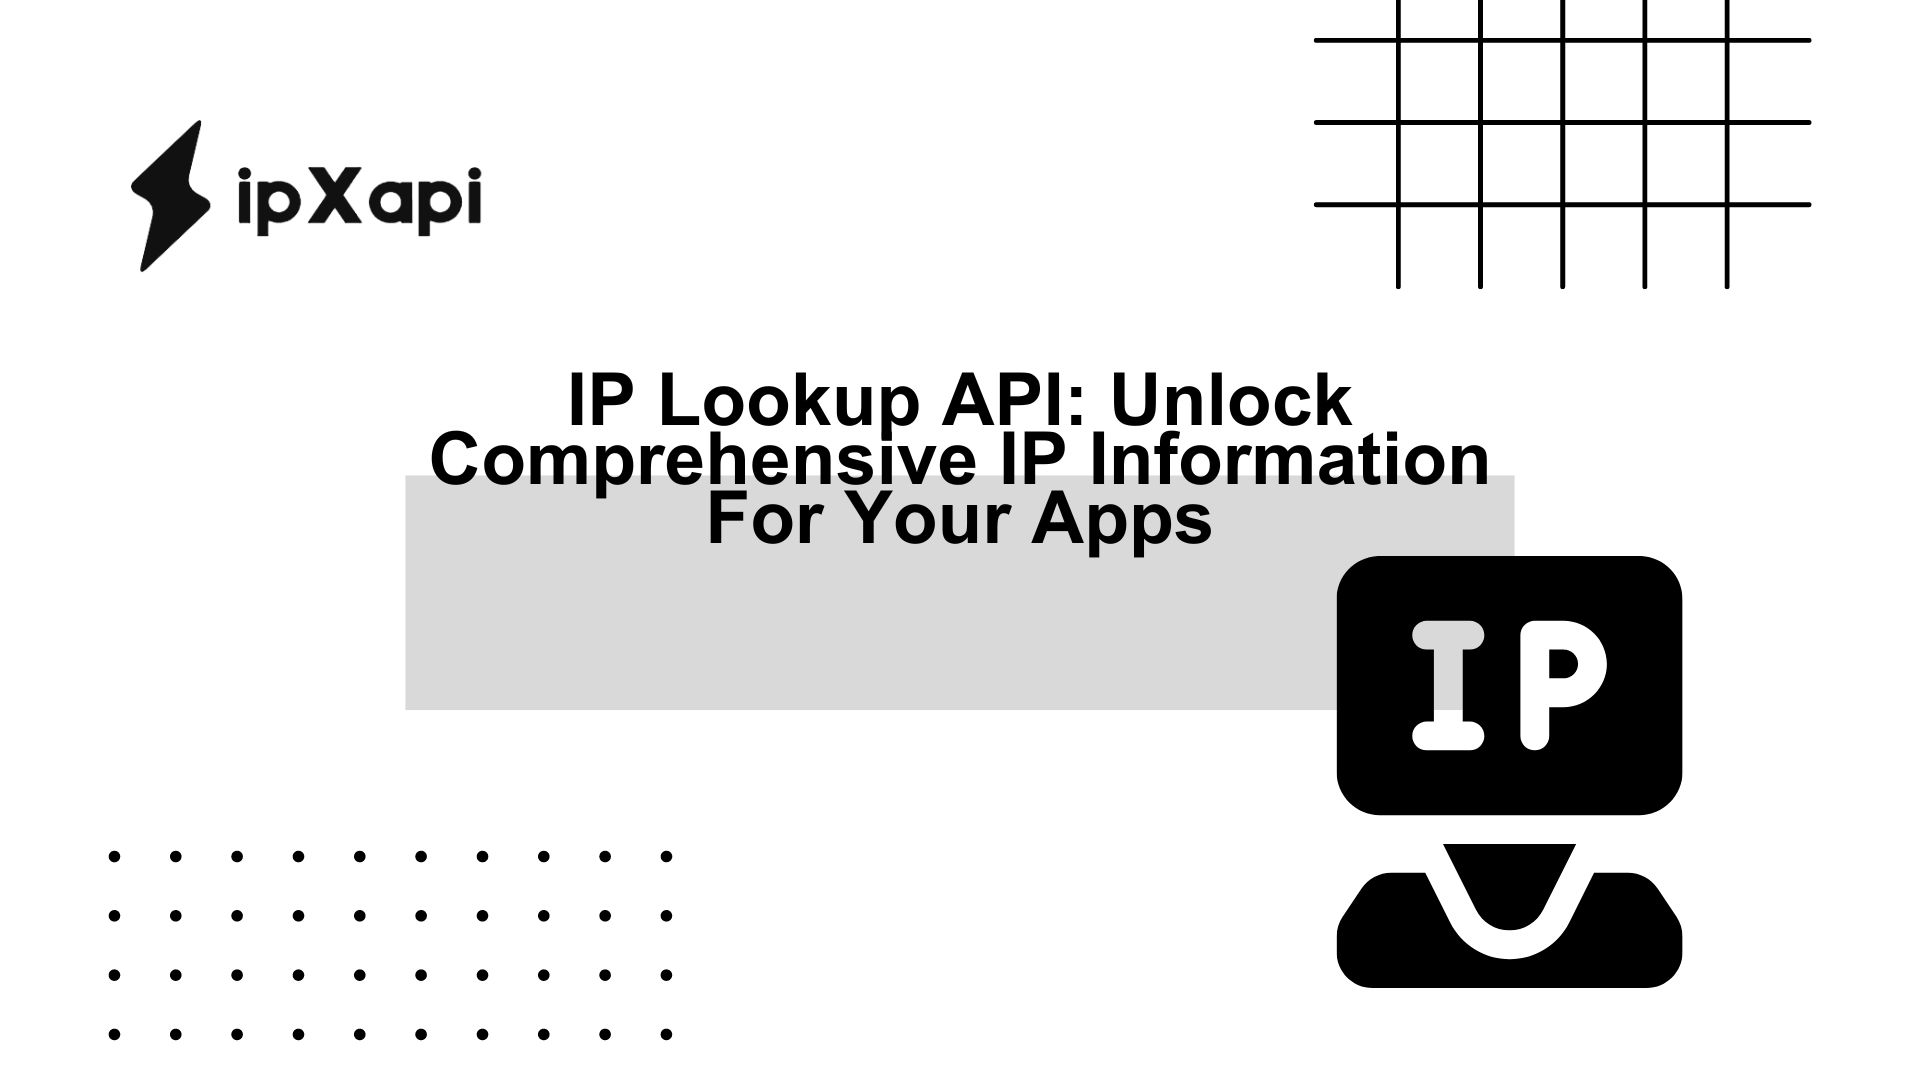 IP Lookup API: Unlock Comprehensive IP Information For Your Apps